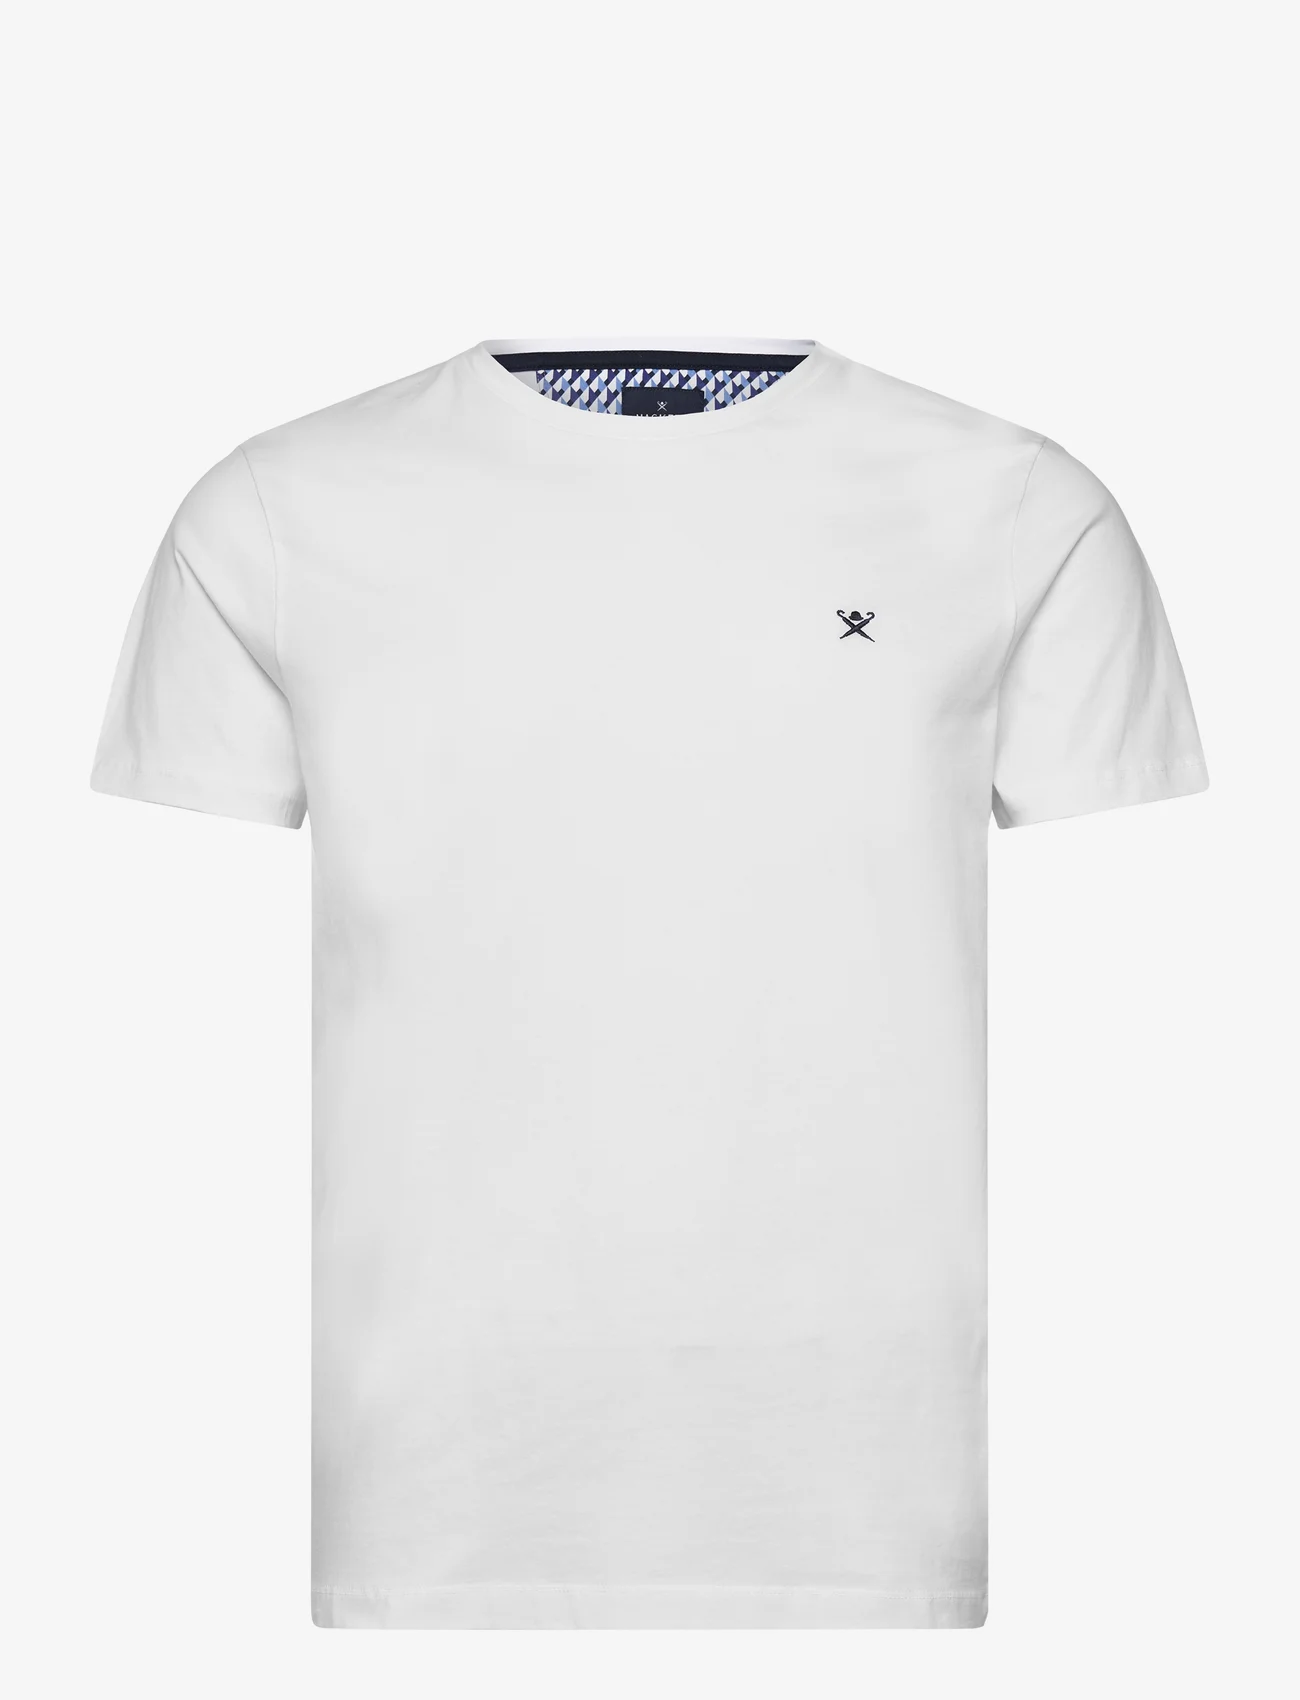 Hackett London - SWIM TRIM LOGO TEE - short-sleeved t-shirts - white - 0